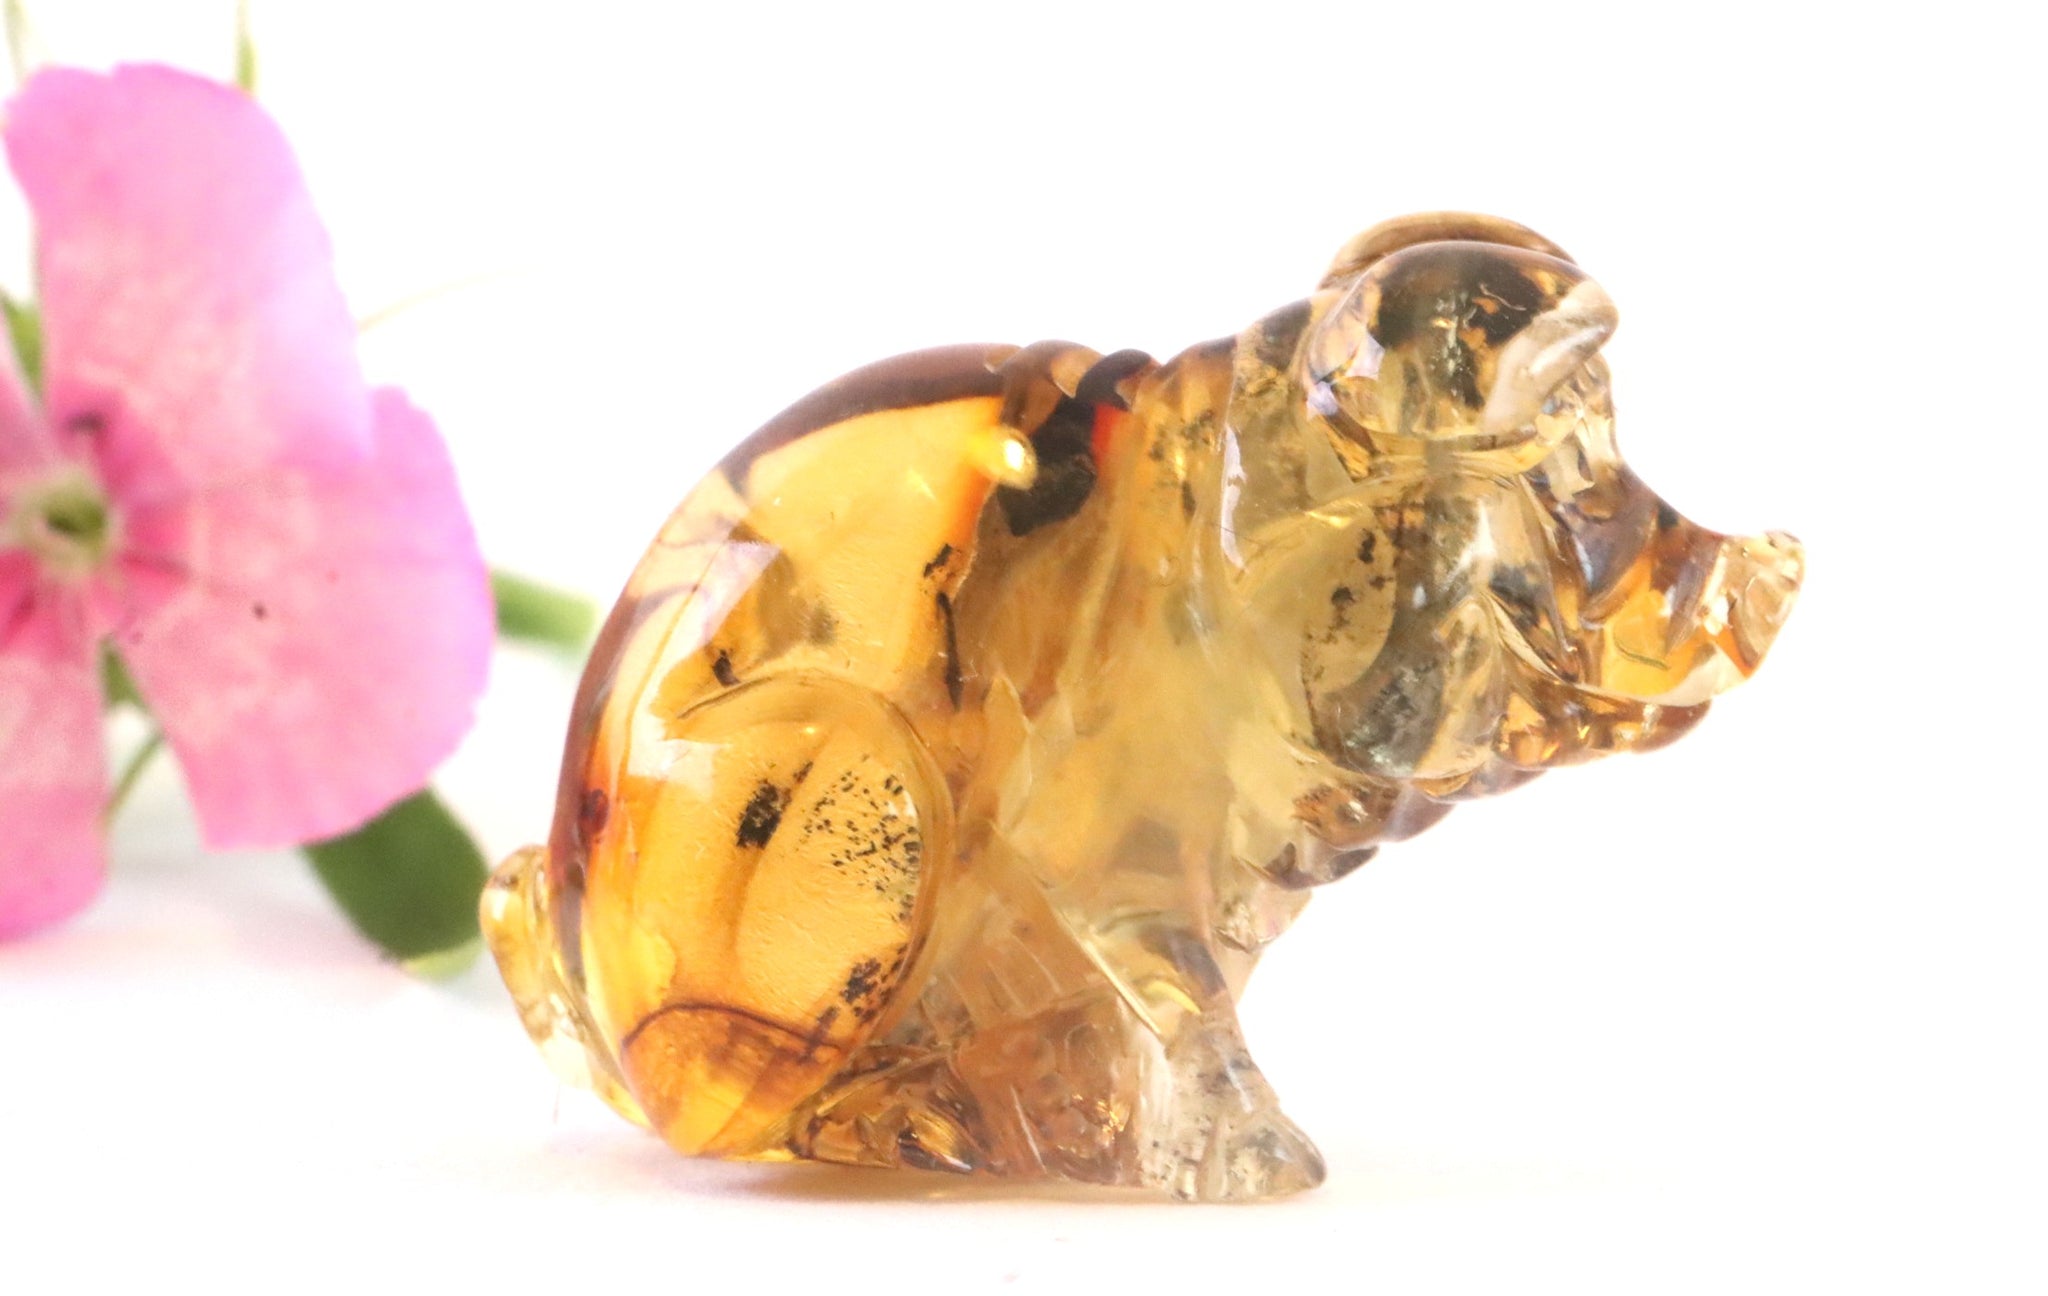 Unique Pig Figurine of Hand Carved Amber Gemstone